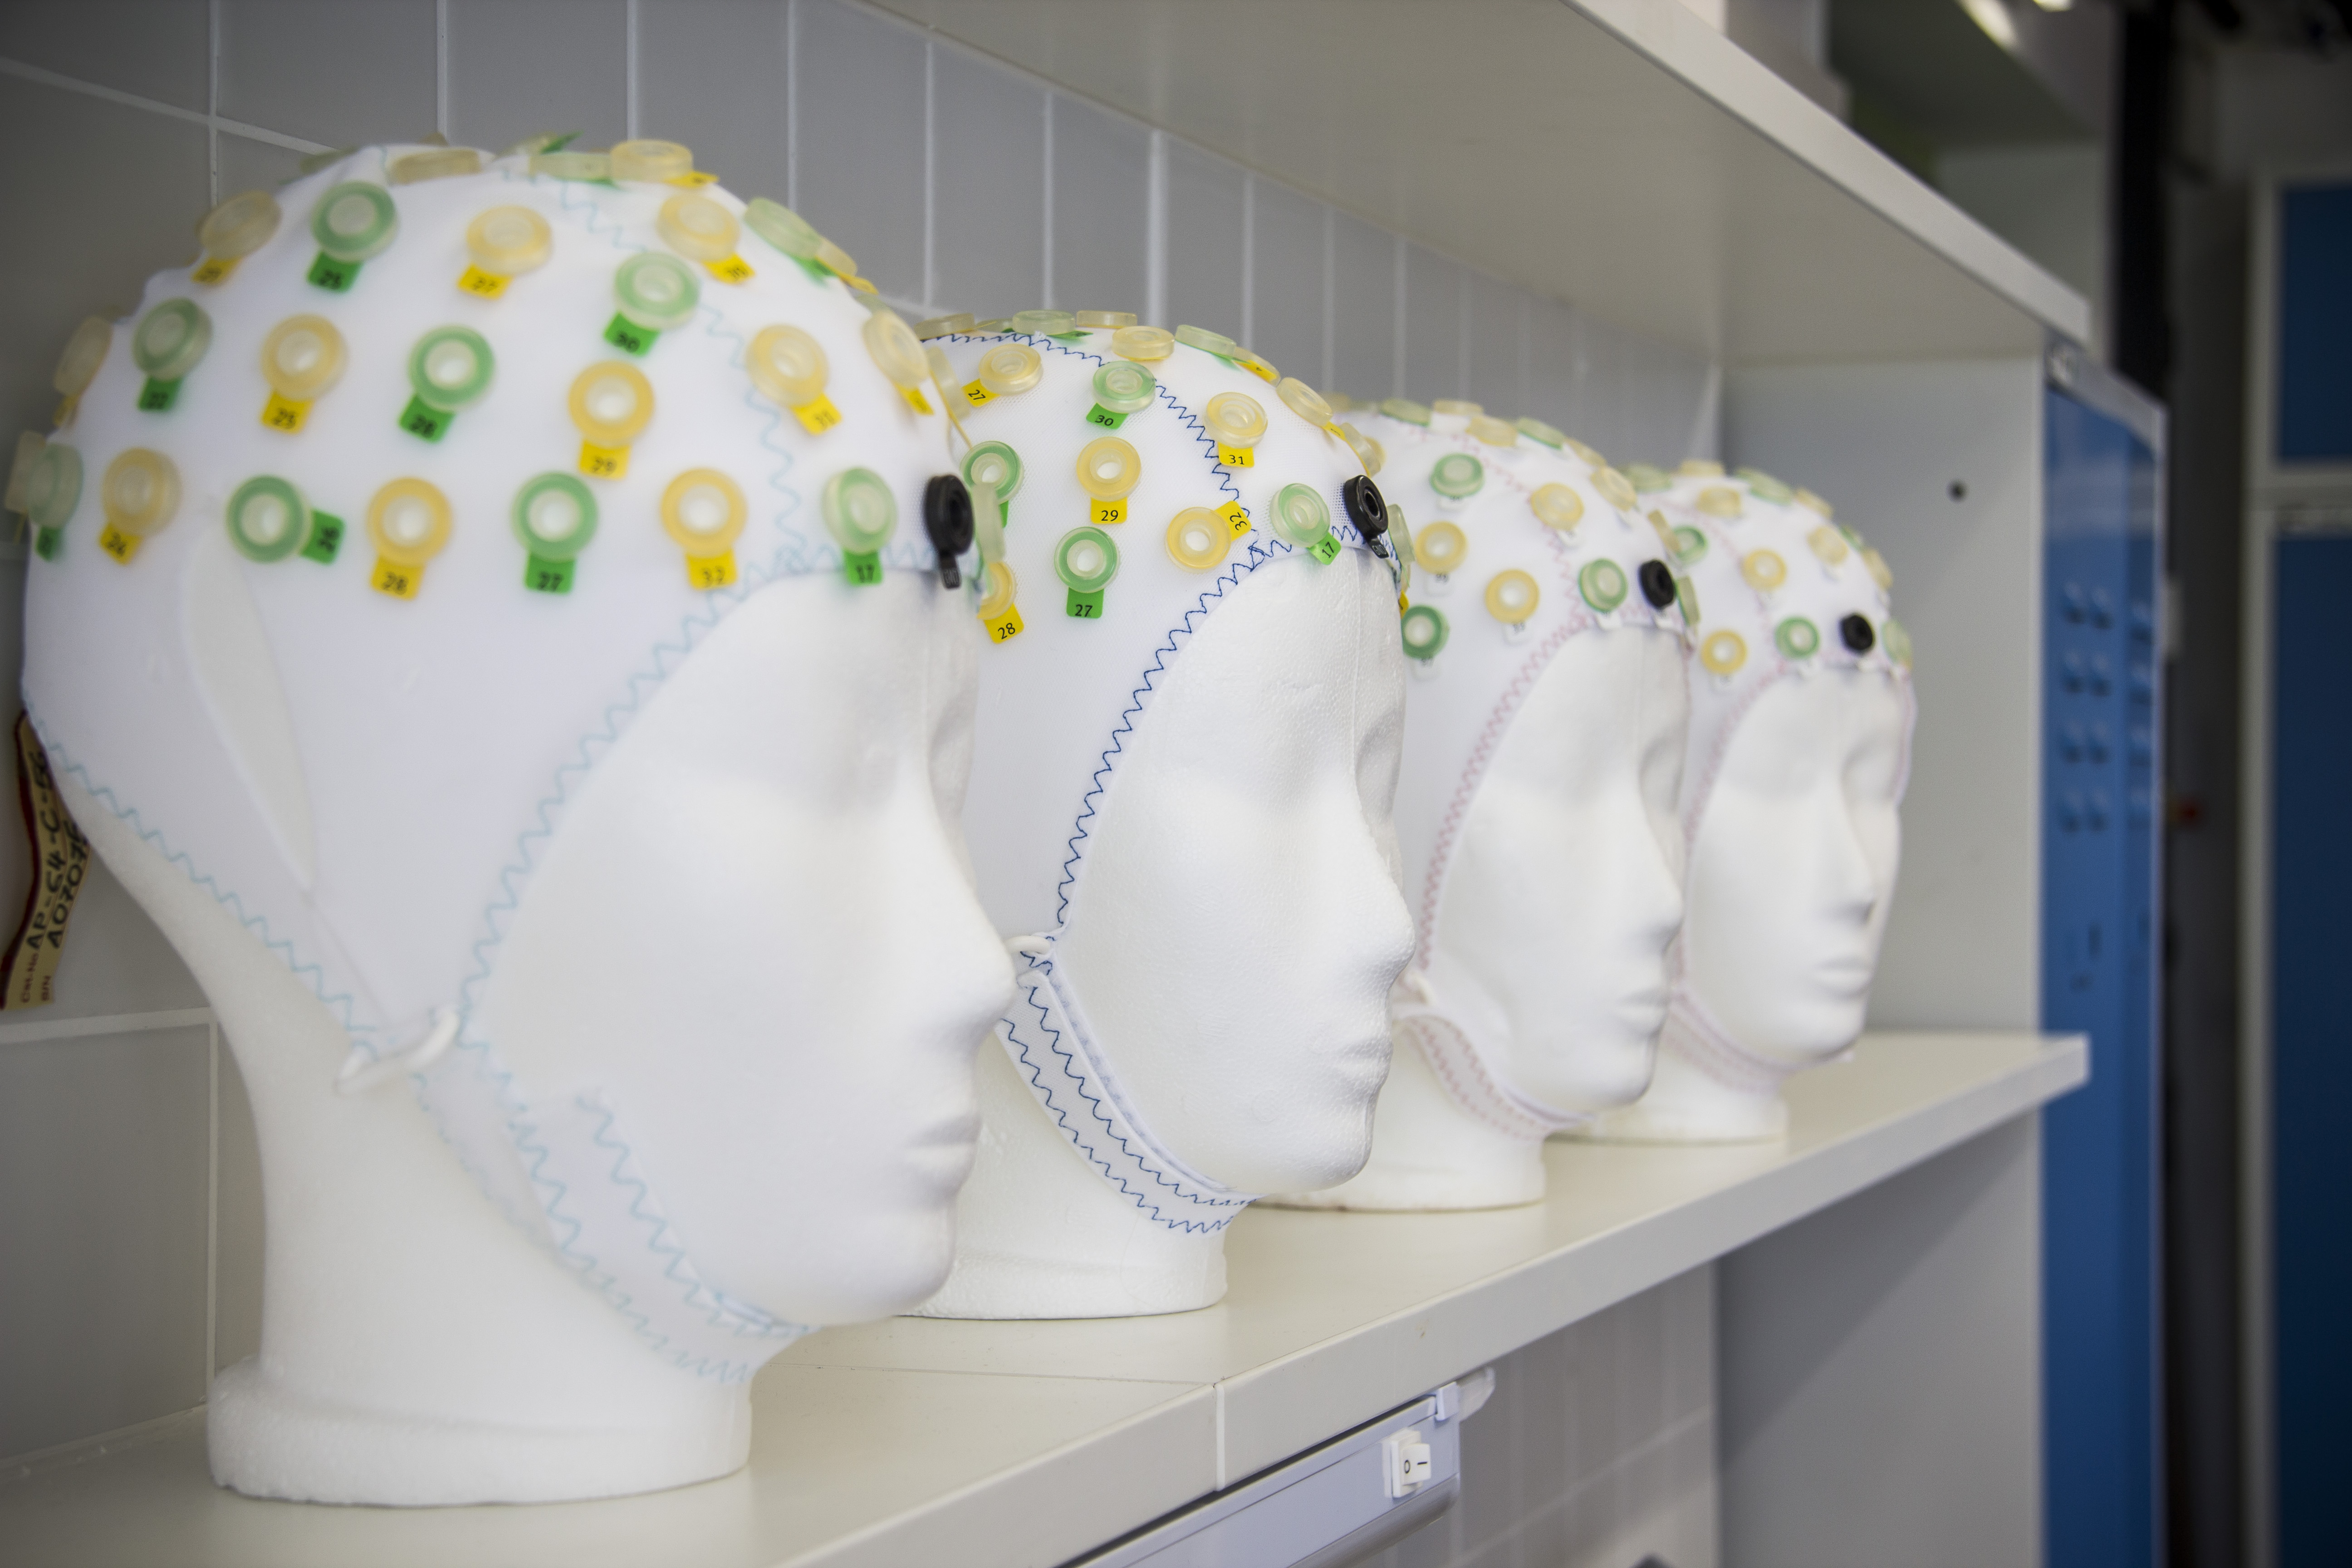 EEG caps on polystyrene heads sitting on a shelf